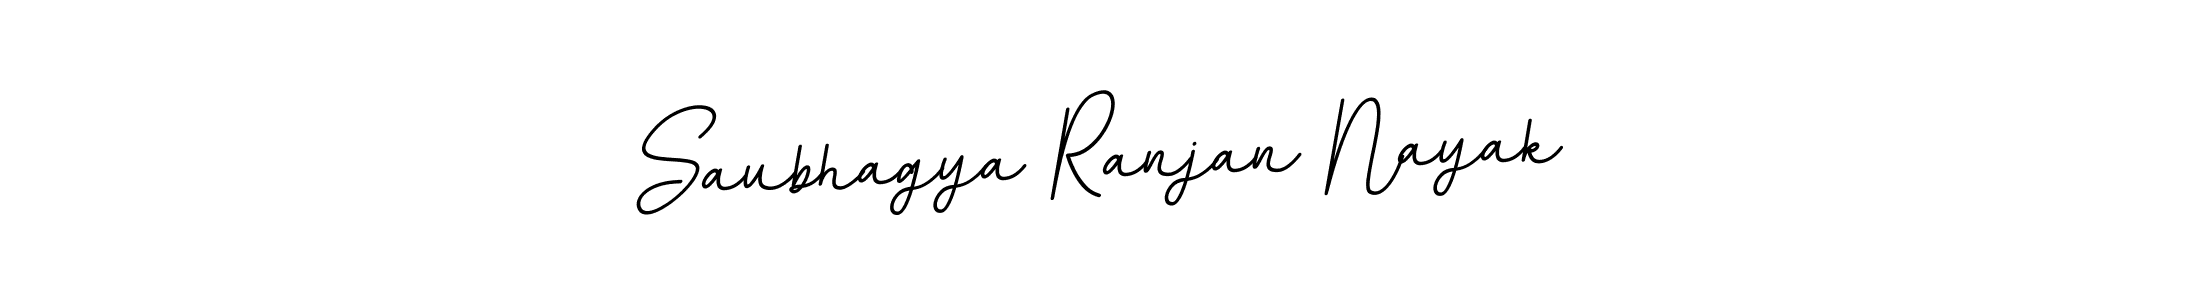 How to Draw Saubhagya Ranjan Nayak signature style? BallpointsItalic-DORy9 is a latest design signature styles for name Saubhagya Ranjan Nayak. Saubhagya Ranjan Nayak signature style 11 images and pictures png